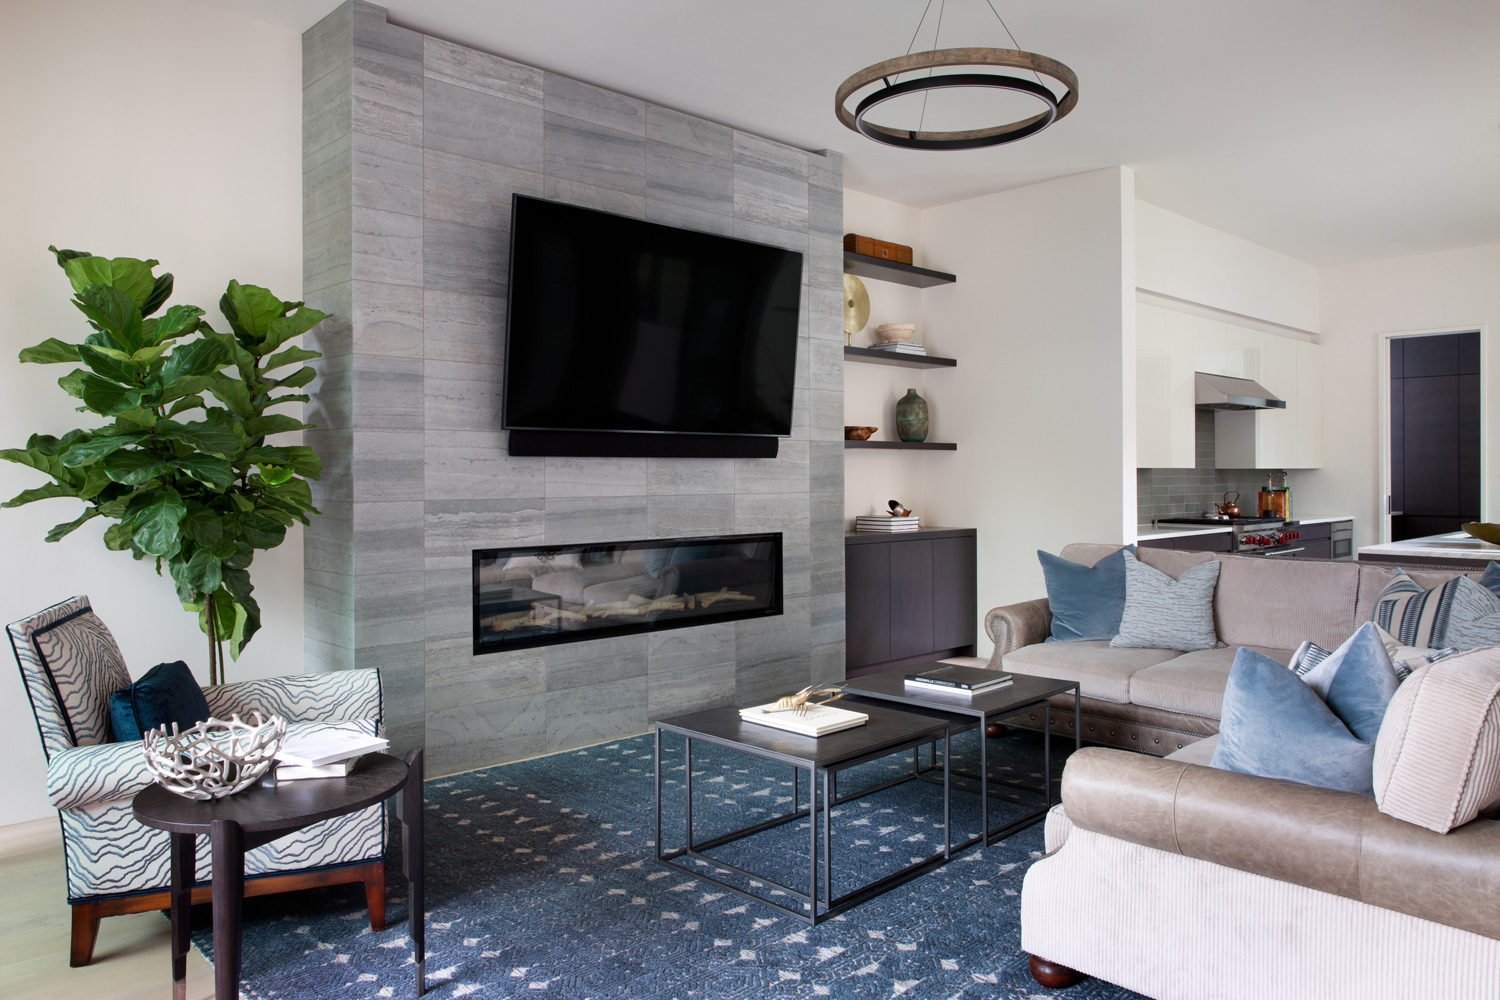 palma-plaza-living-room-fireplace-interior-design